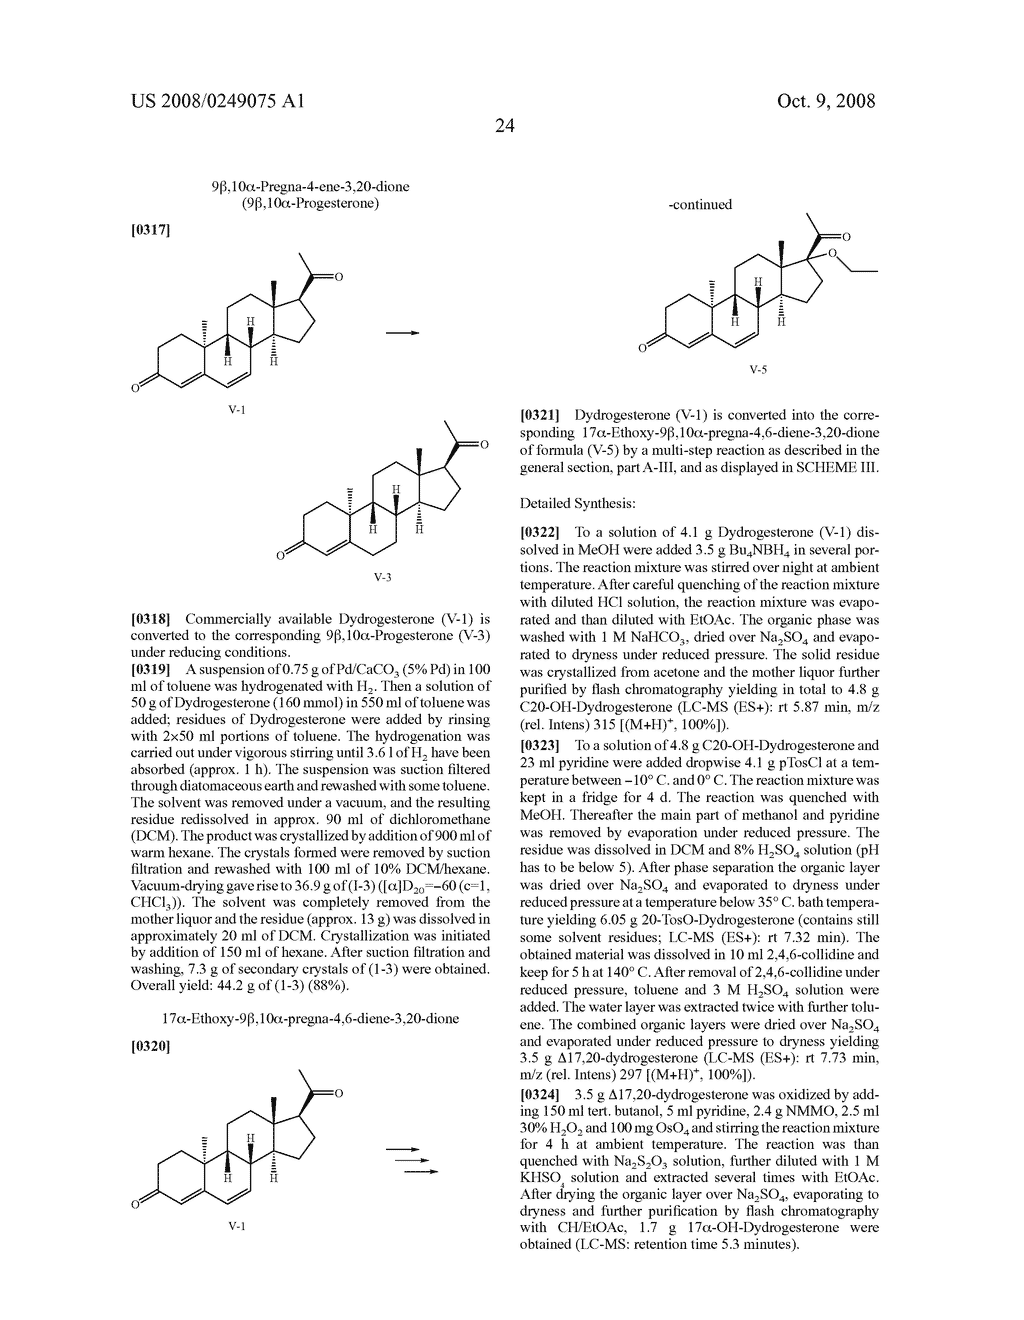 C11 Modified Retrosteroids as Progesterone Receptor Modulator Compounds - diagram, schematic, and image 26